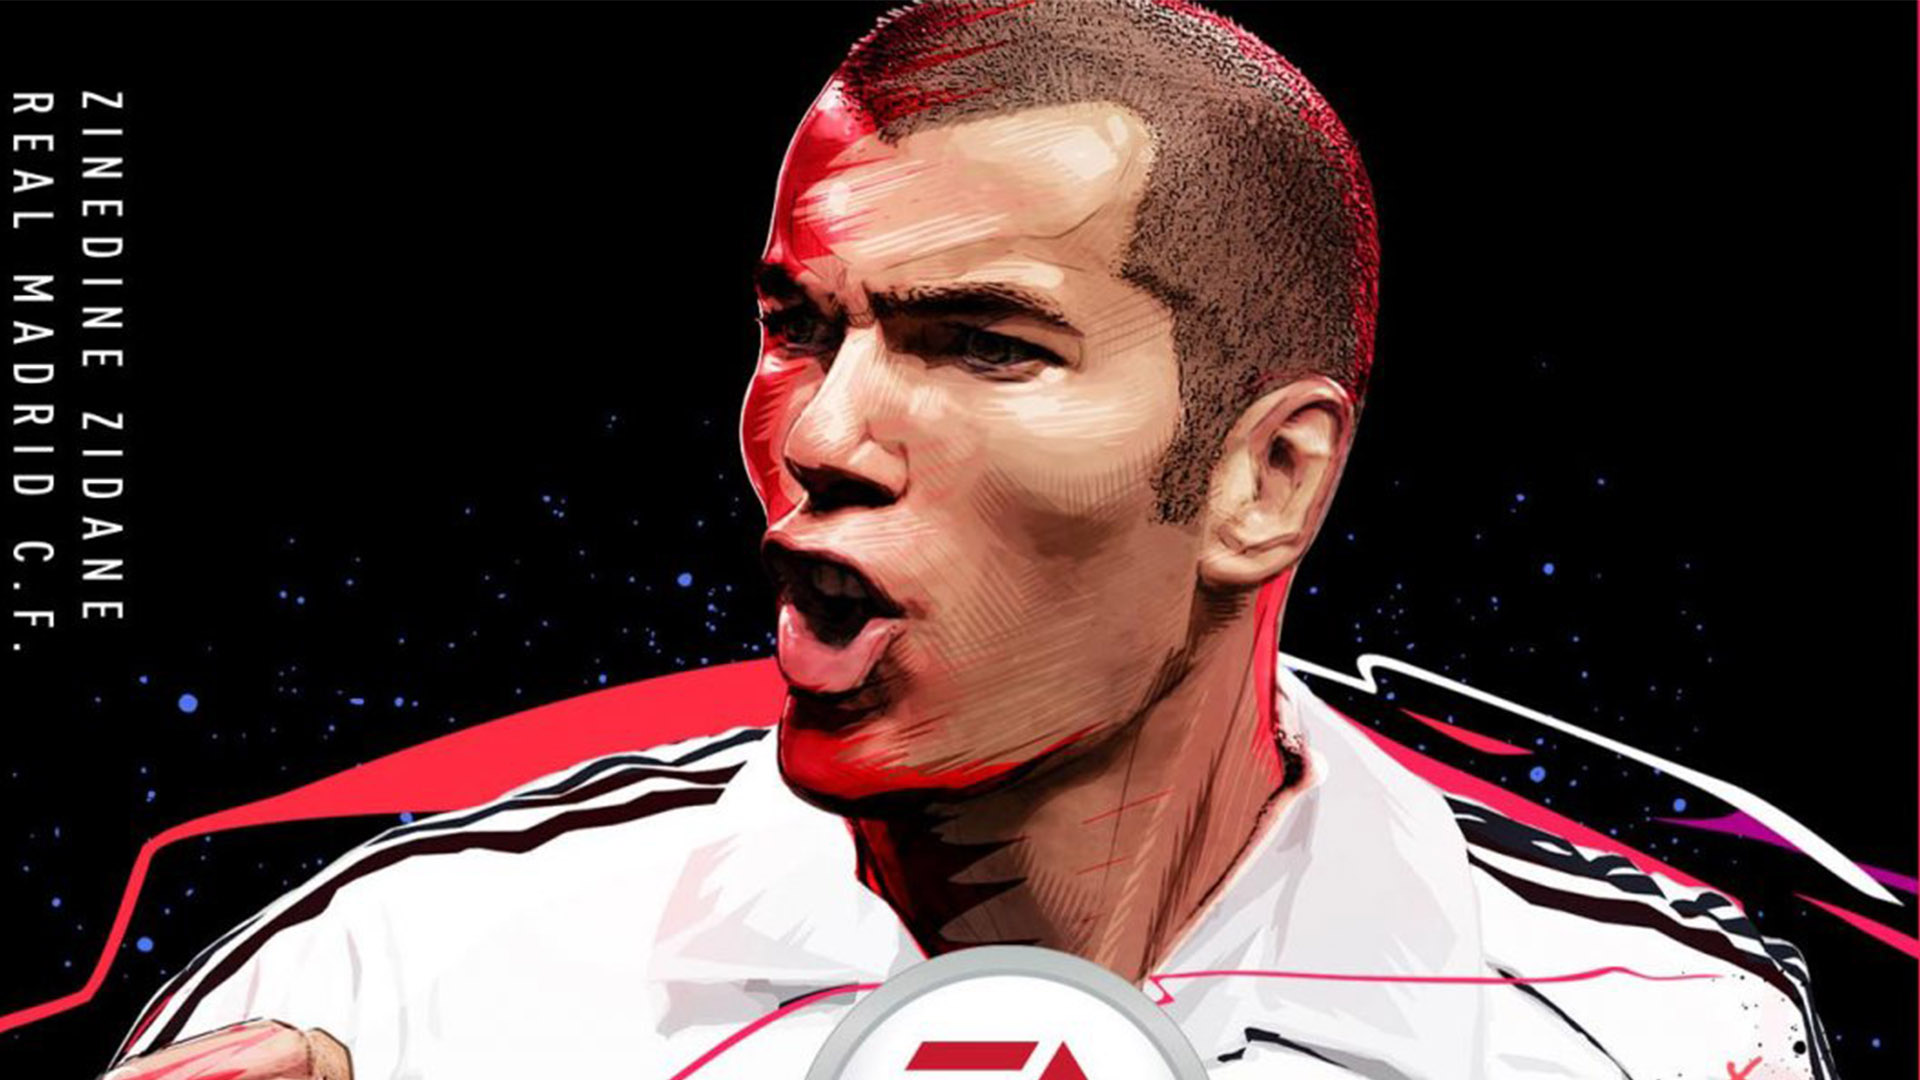 Zidane Fifa 20